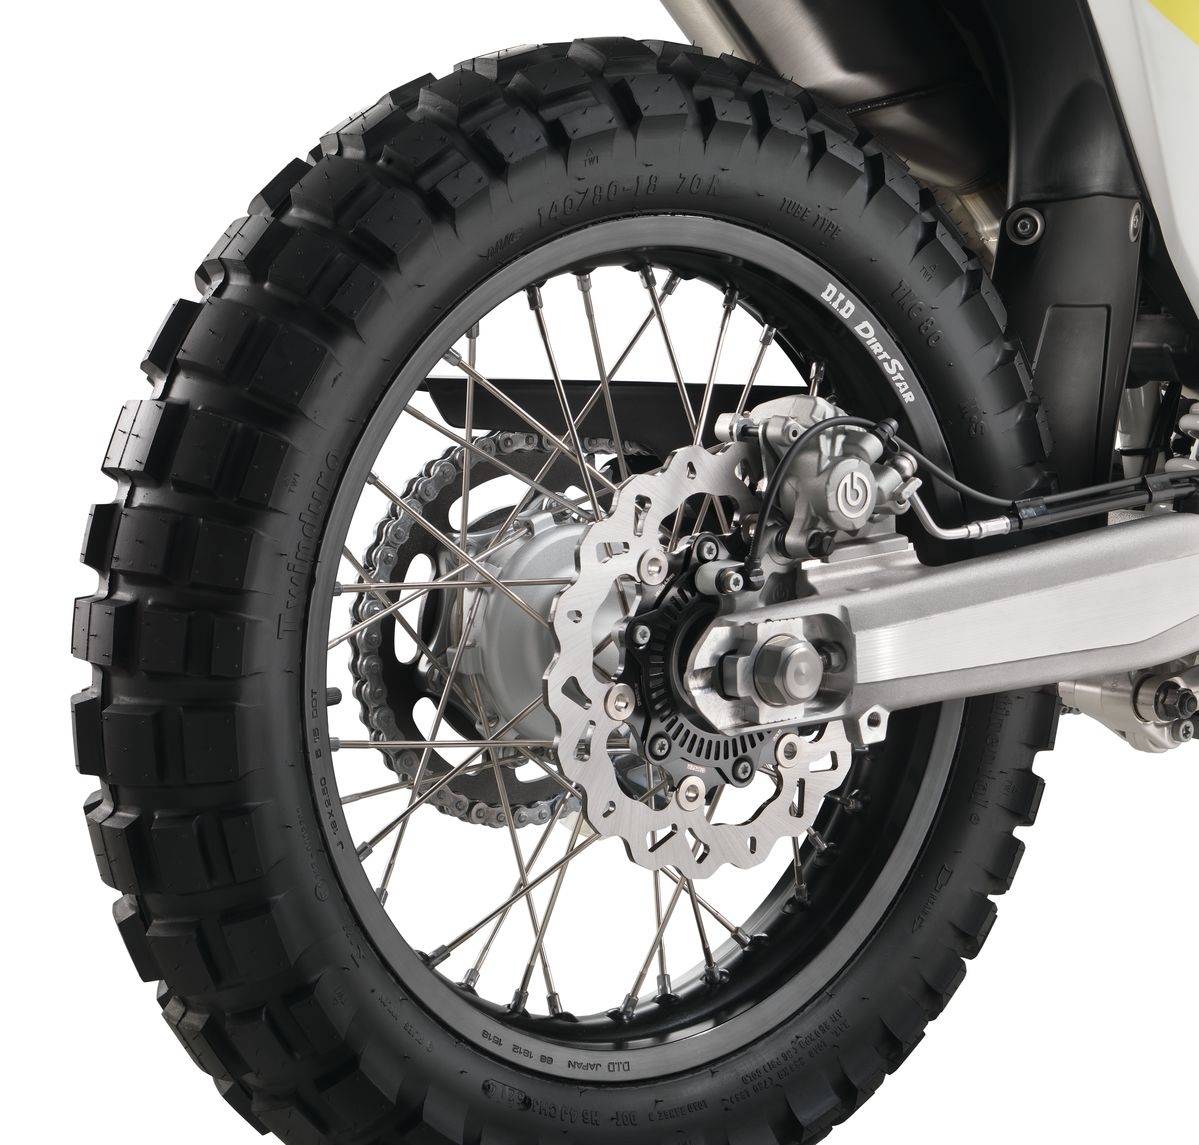 View - 2016 husqvarna 701 enduro accessorized - walkaround - 2015 salon de la moto paris | oto